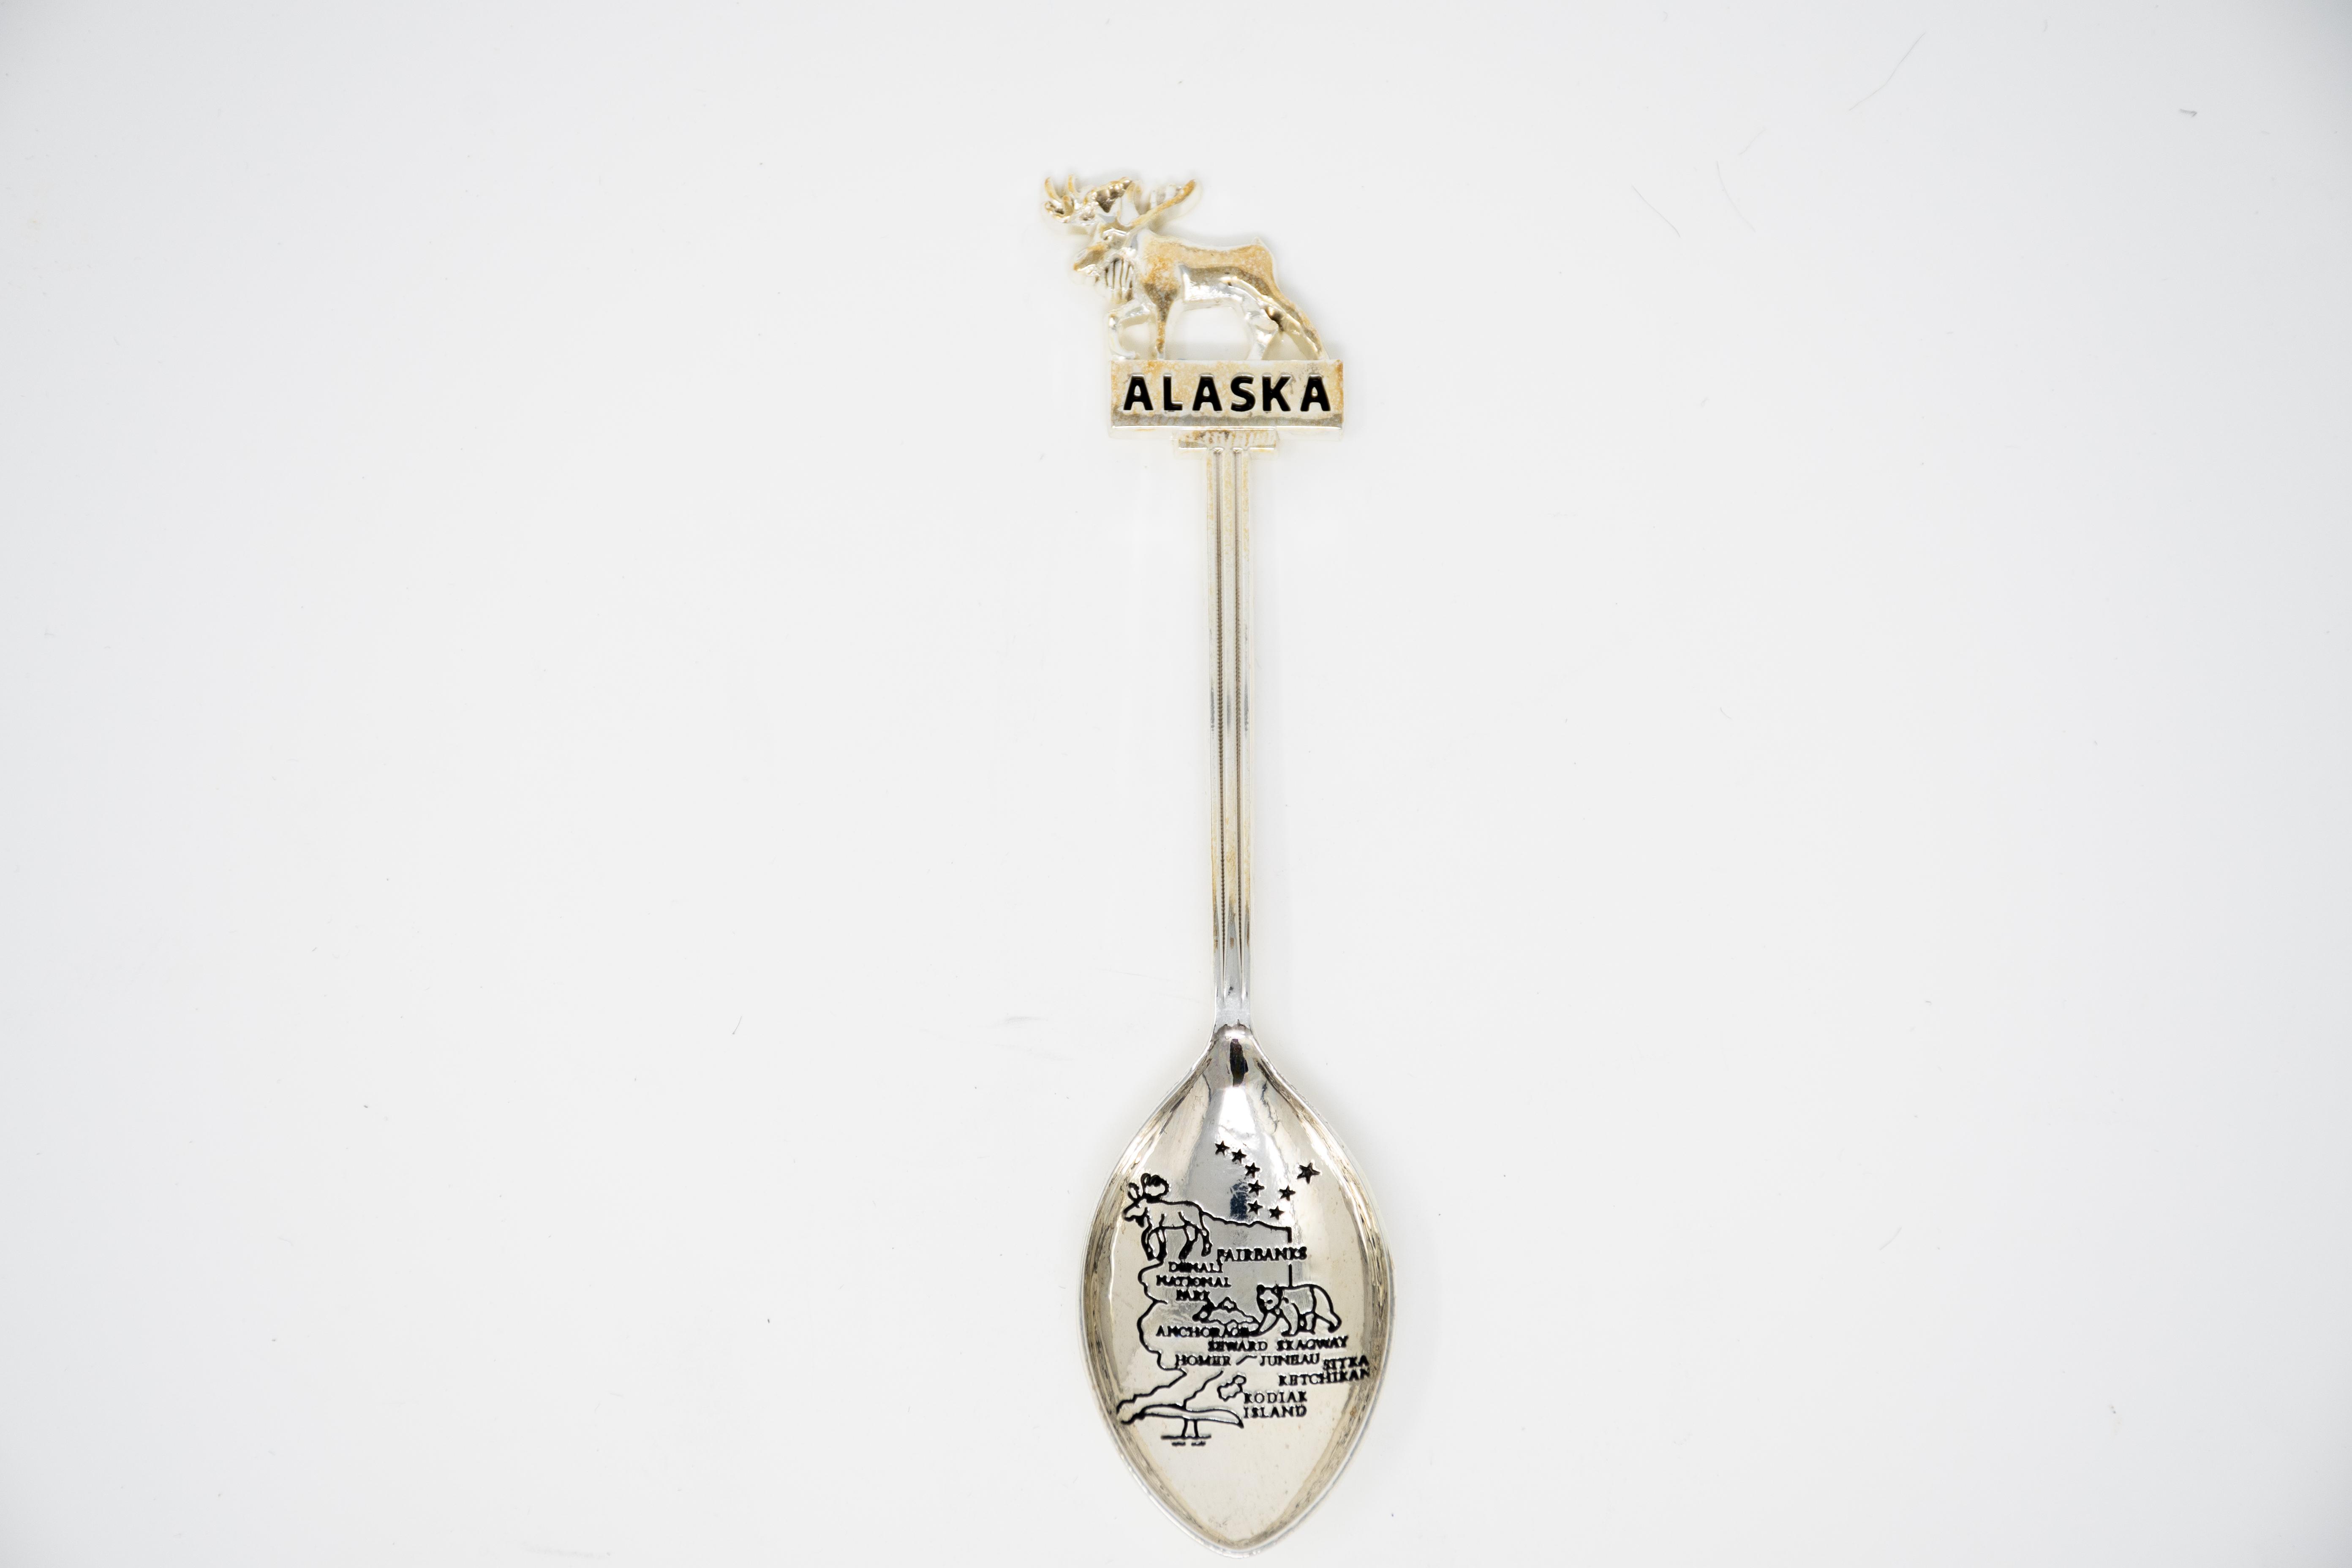  Spoon - 3d Moose W/Alaska